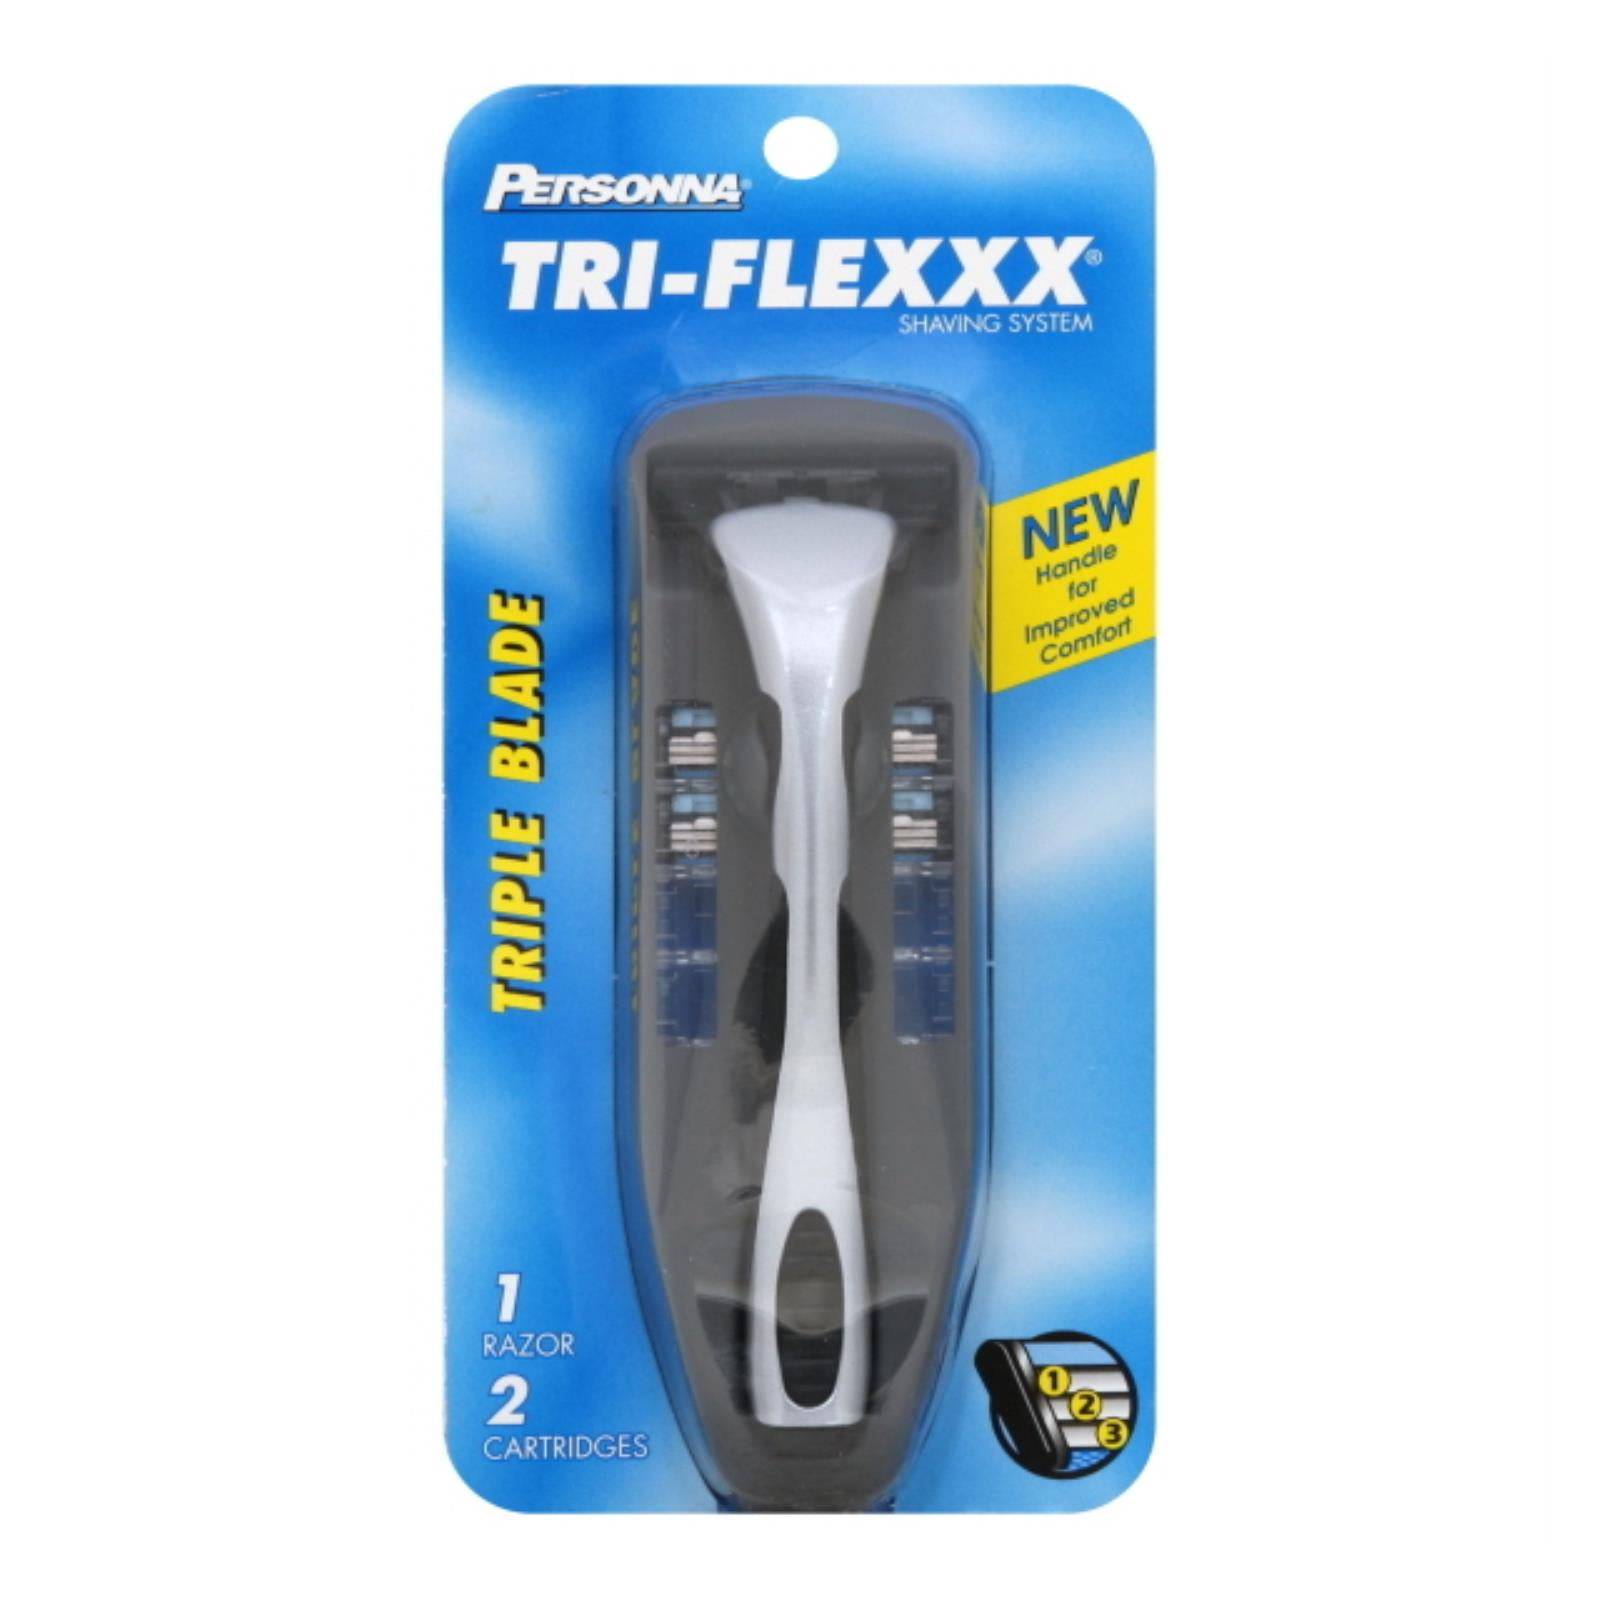 Personna Tri-flexxx Triple Blade Shaving System For Men - 1 Razor 2 Cartridges | OnlyNaturals.us